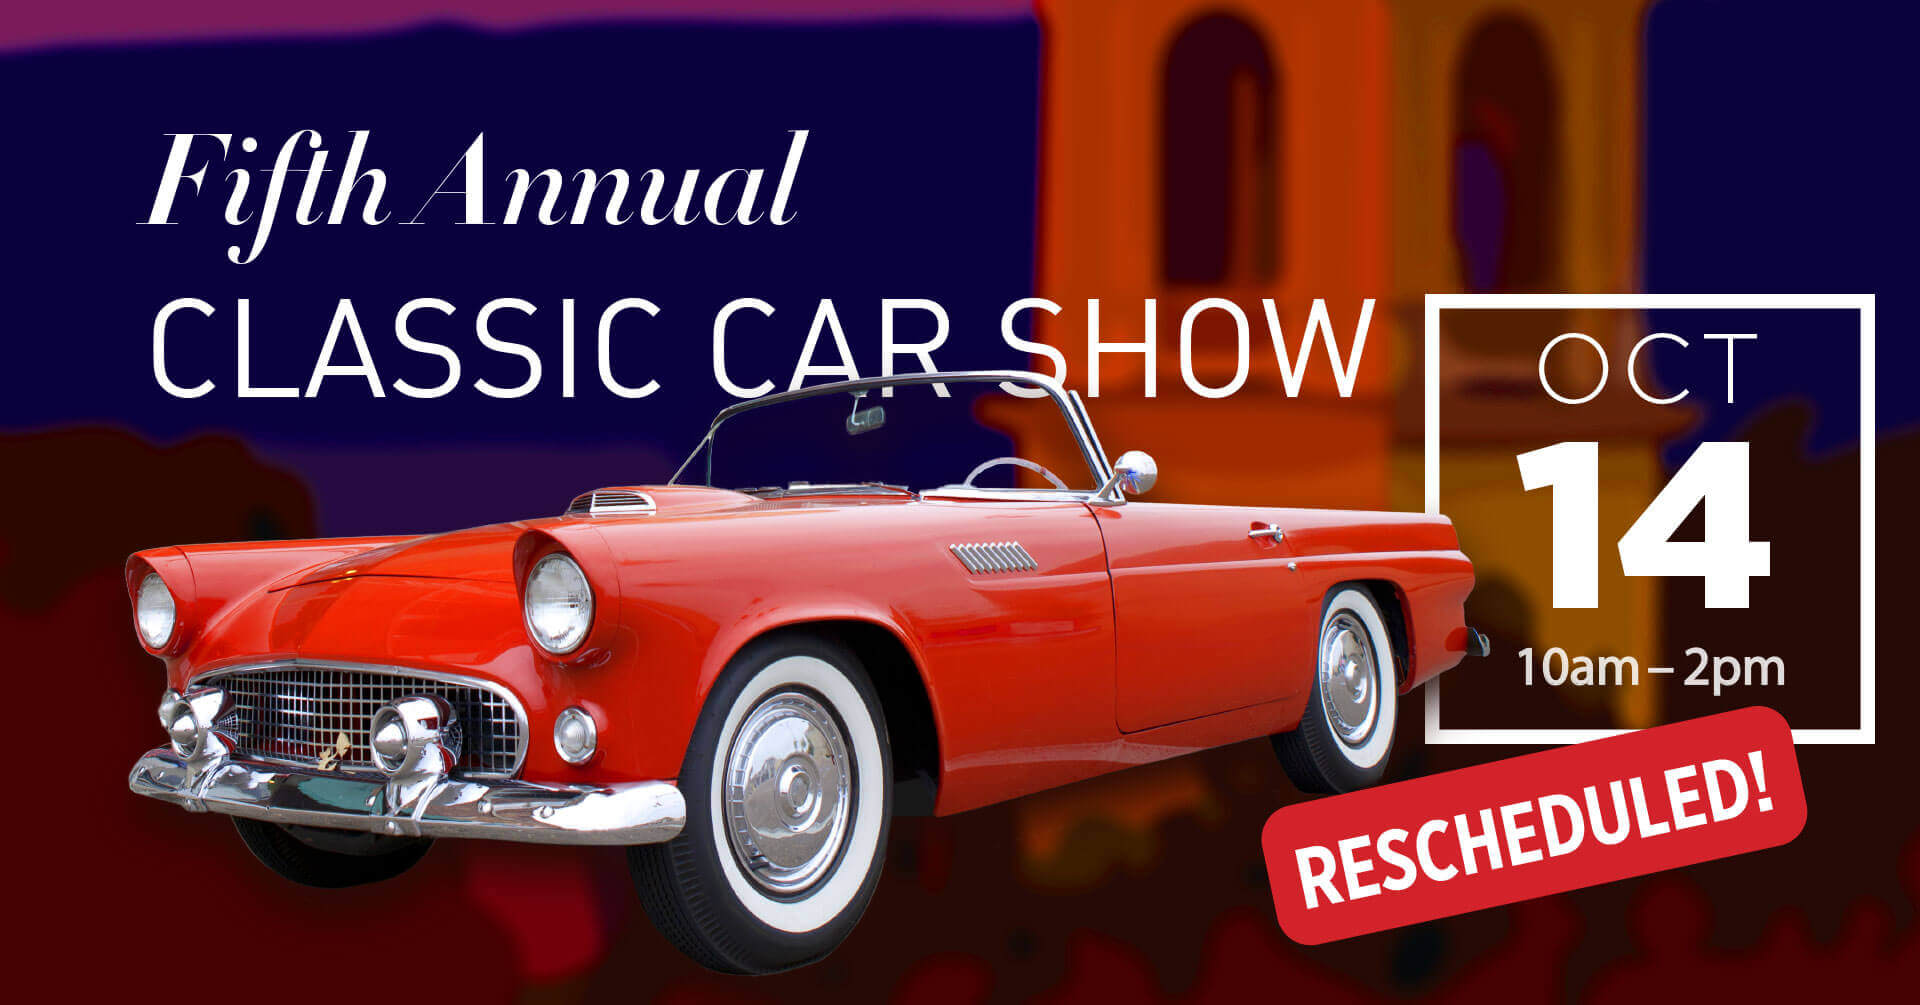 Fifth Annual Classic Car Show